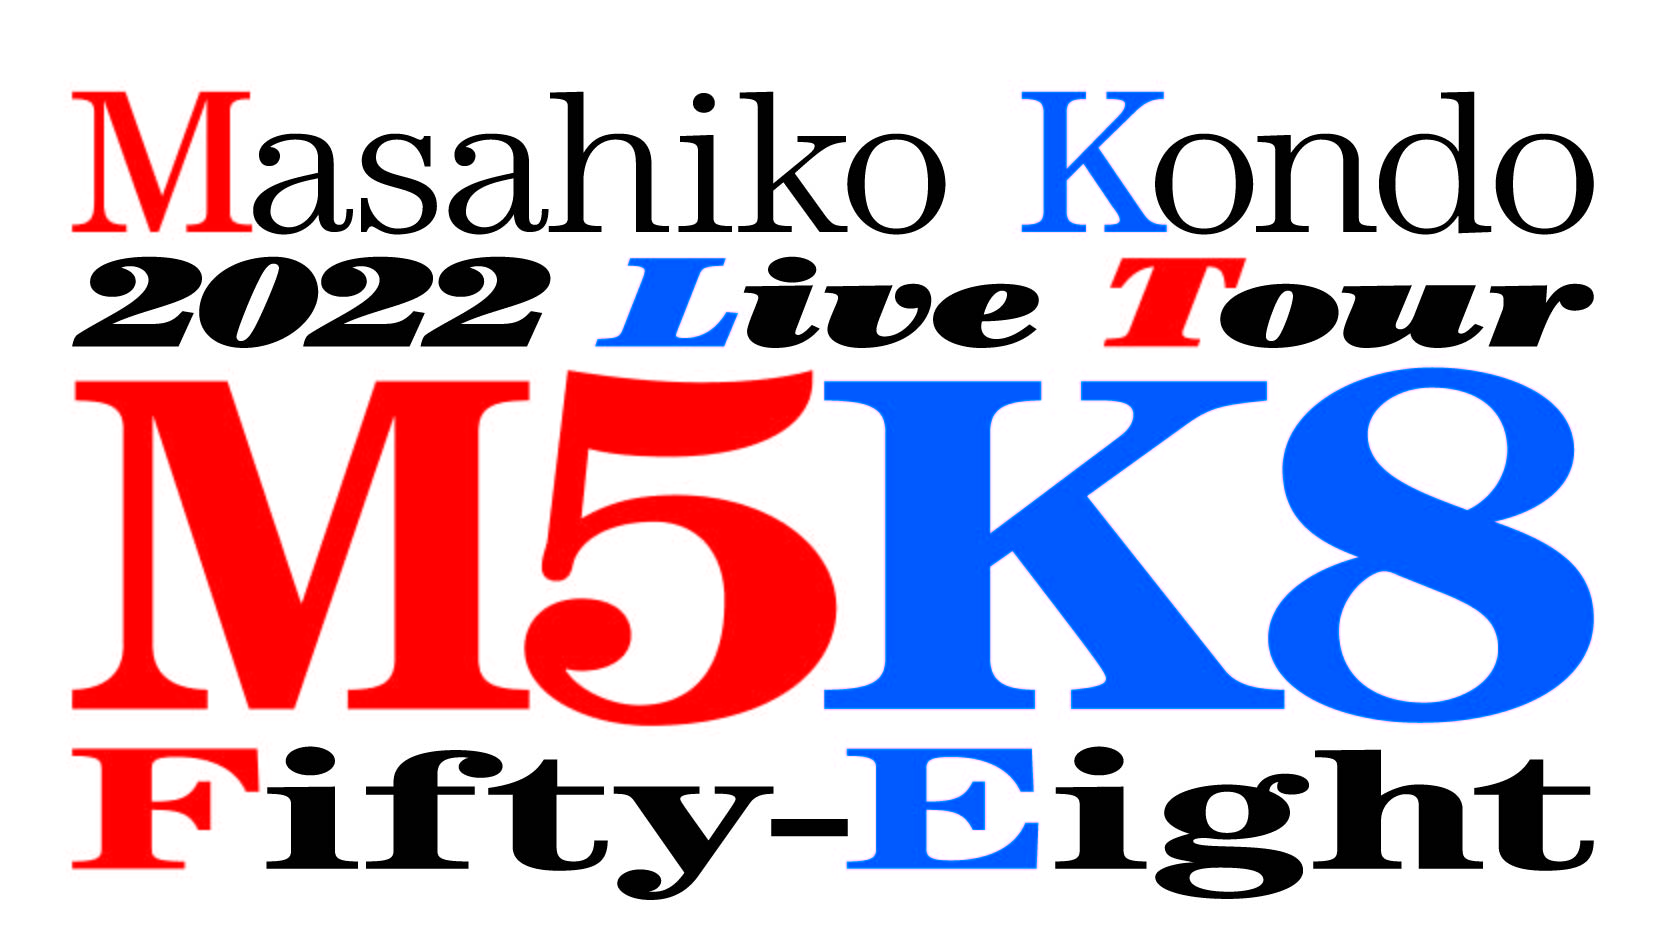 Masahiko KONDO 2022 LiveTour 「M5K8」Fifty-Eight | 近藤真彦